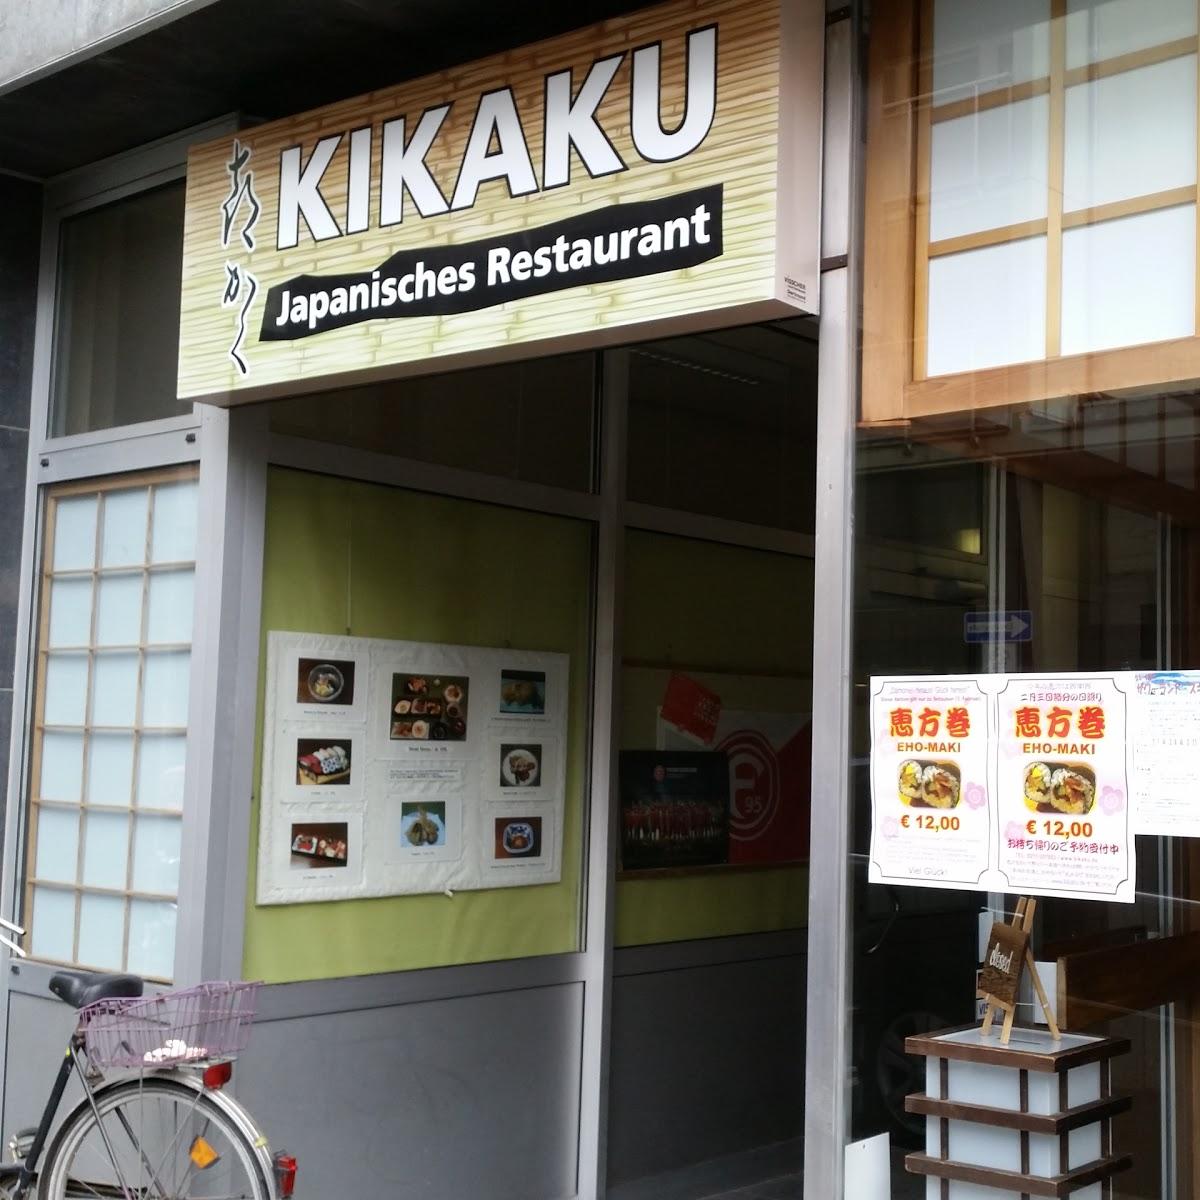 Restaurant "Kikaku" in Düsseldorf